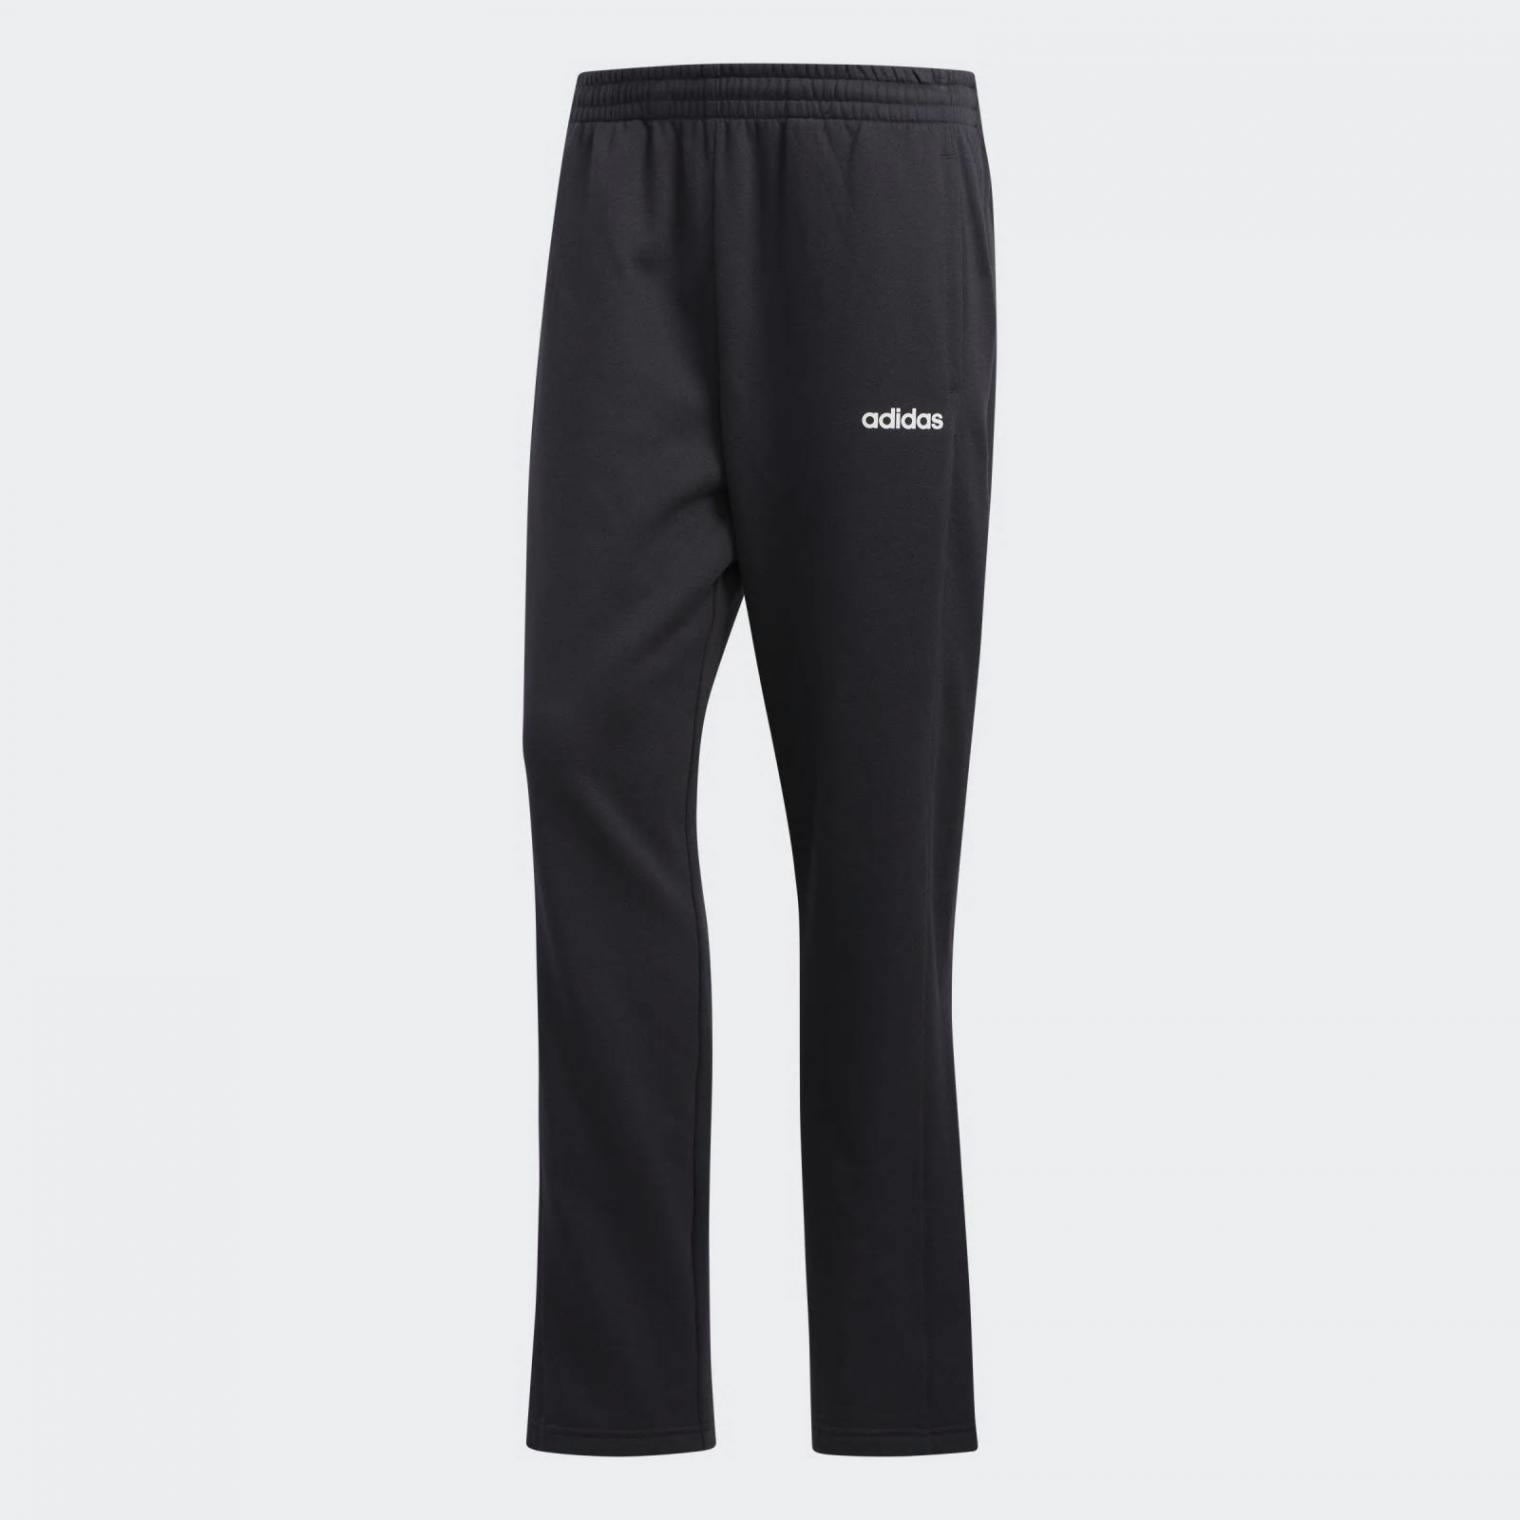 adidas Fleece Exercise Pants for Men for sale | eBay